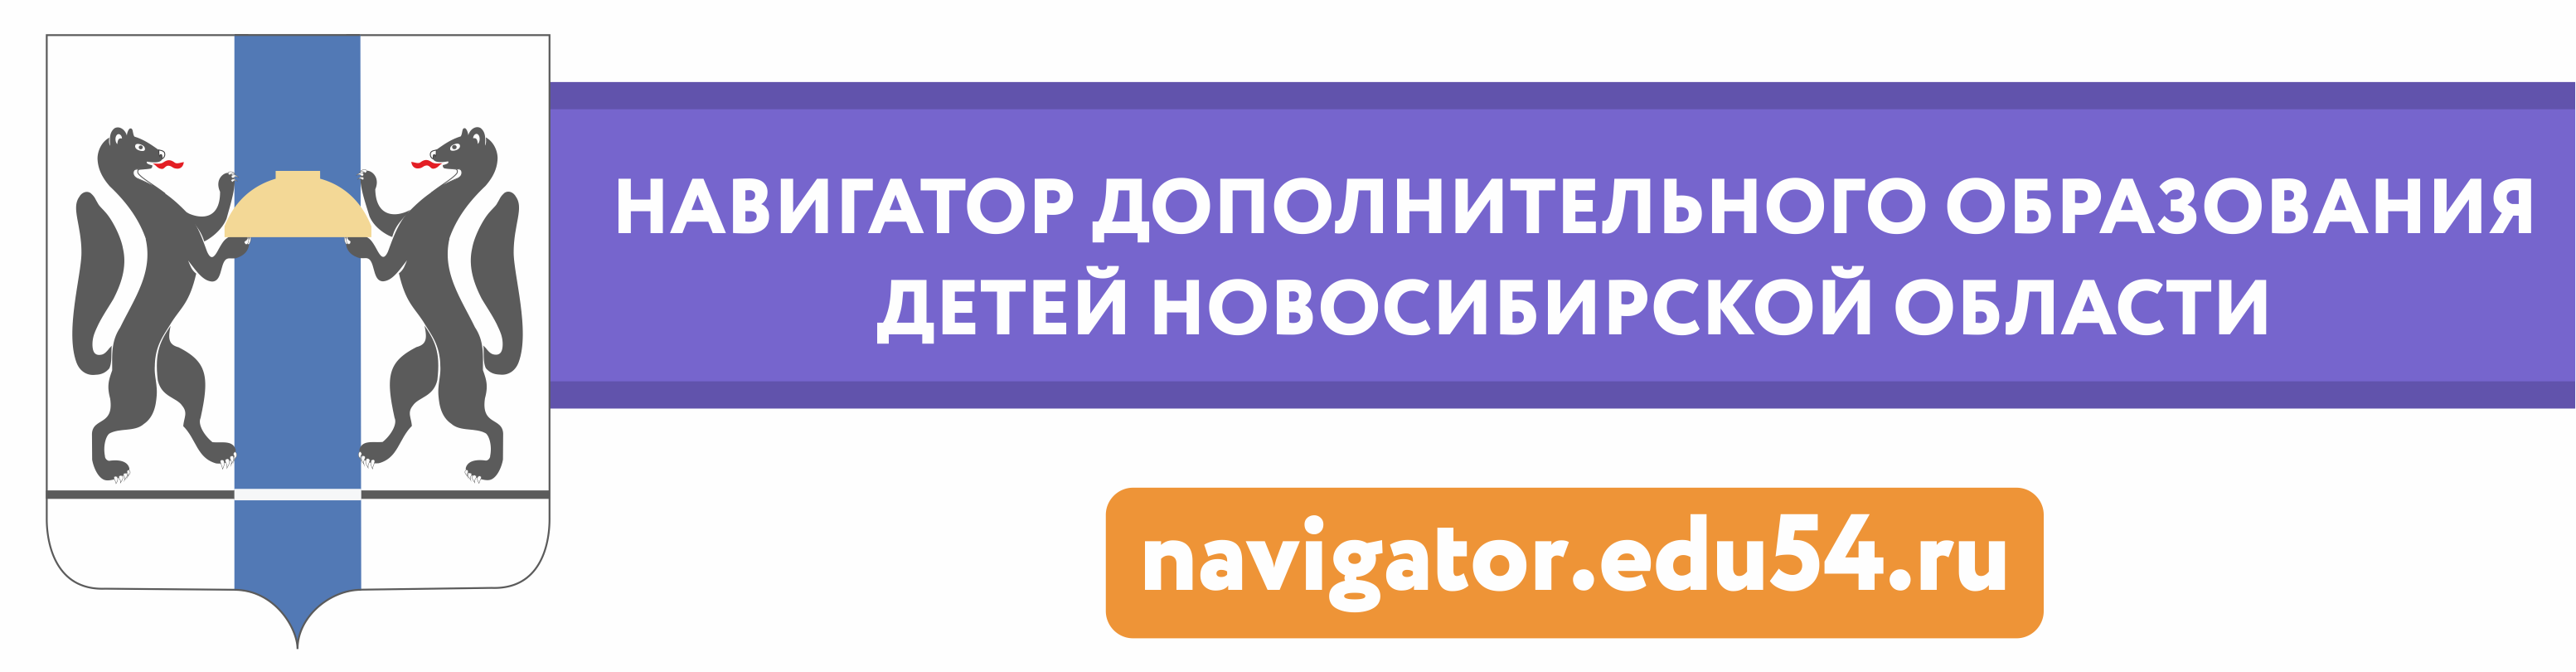 https://navigator.edu54.ru/